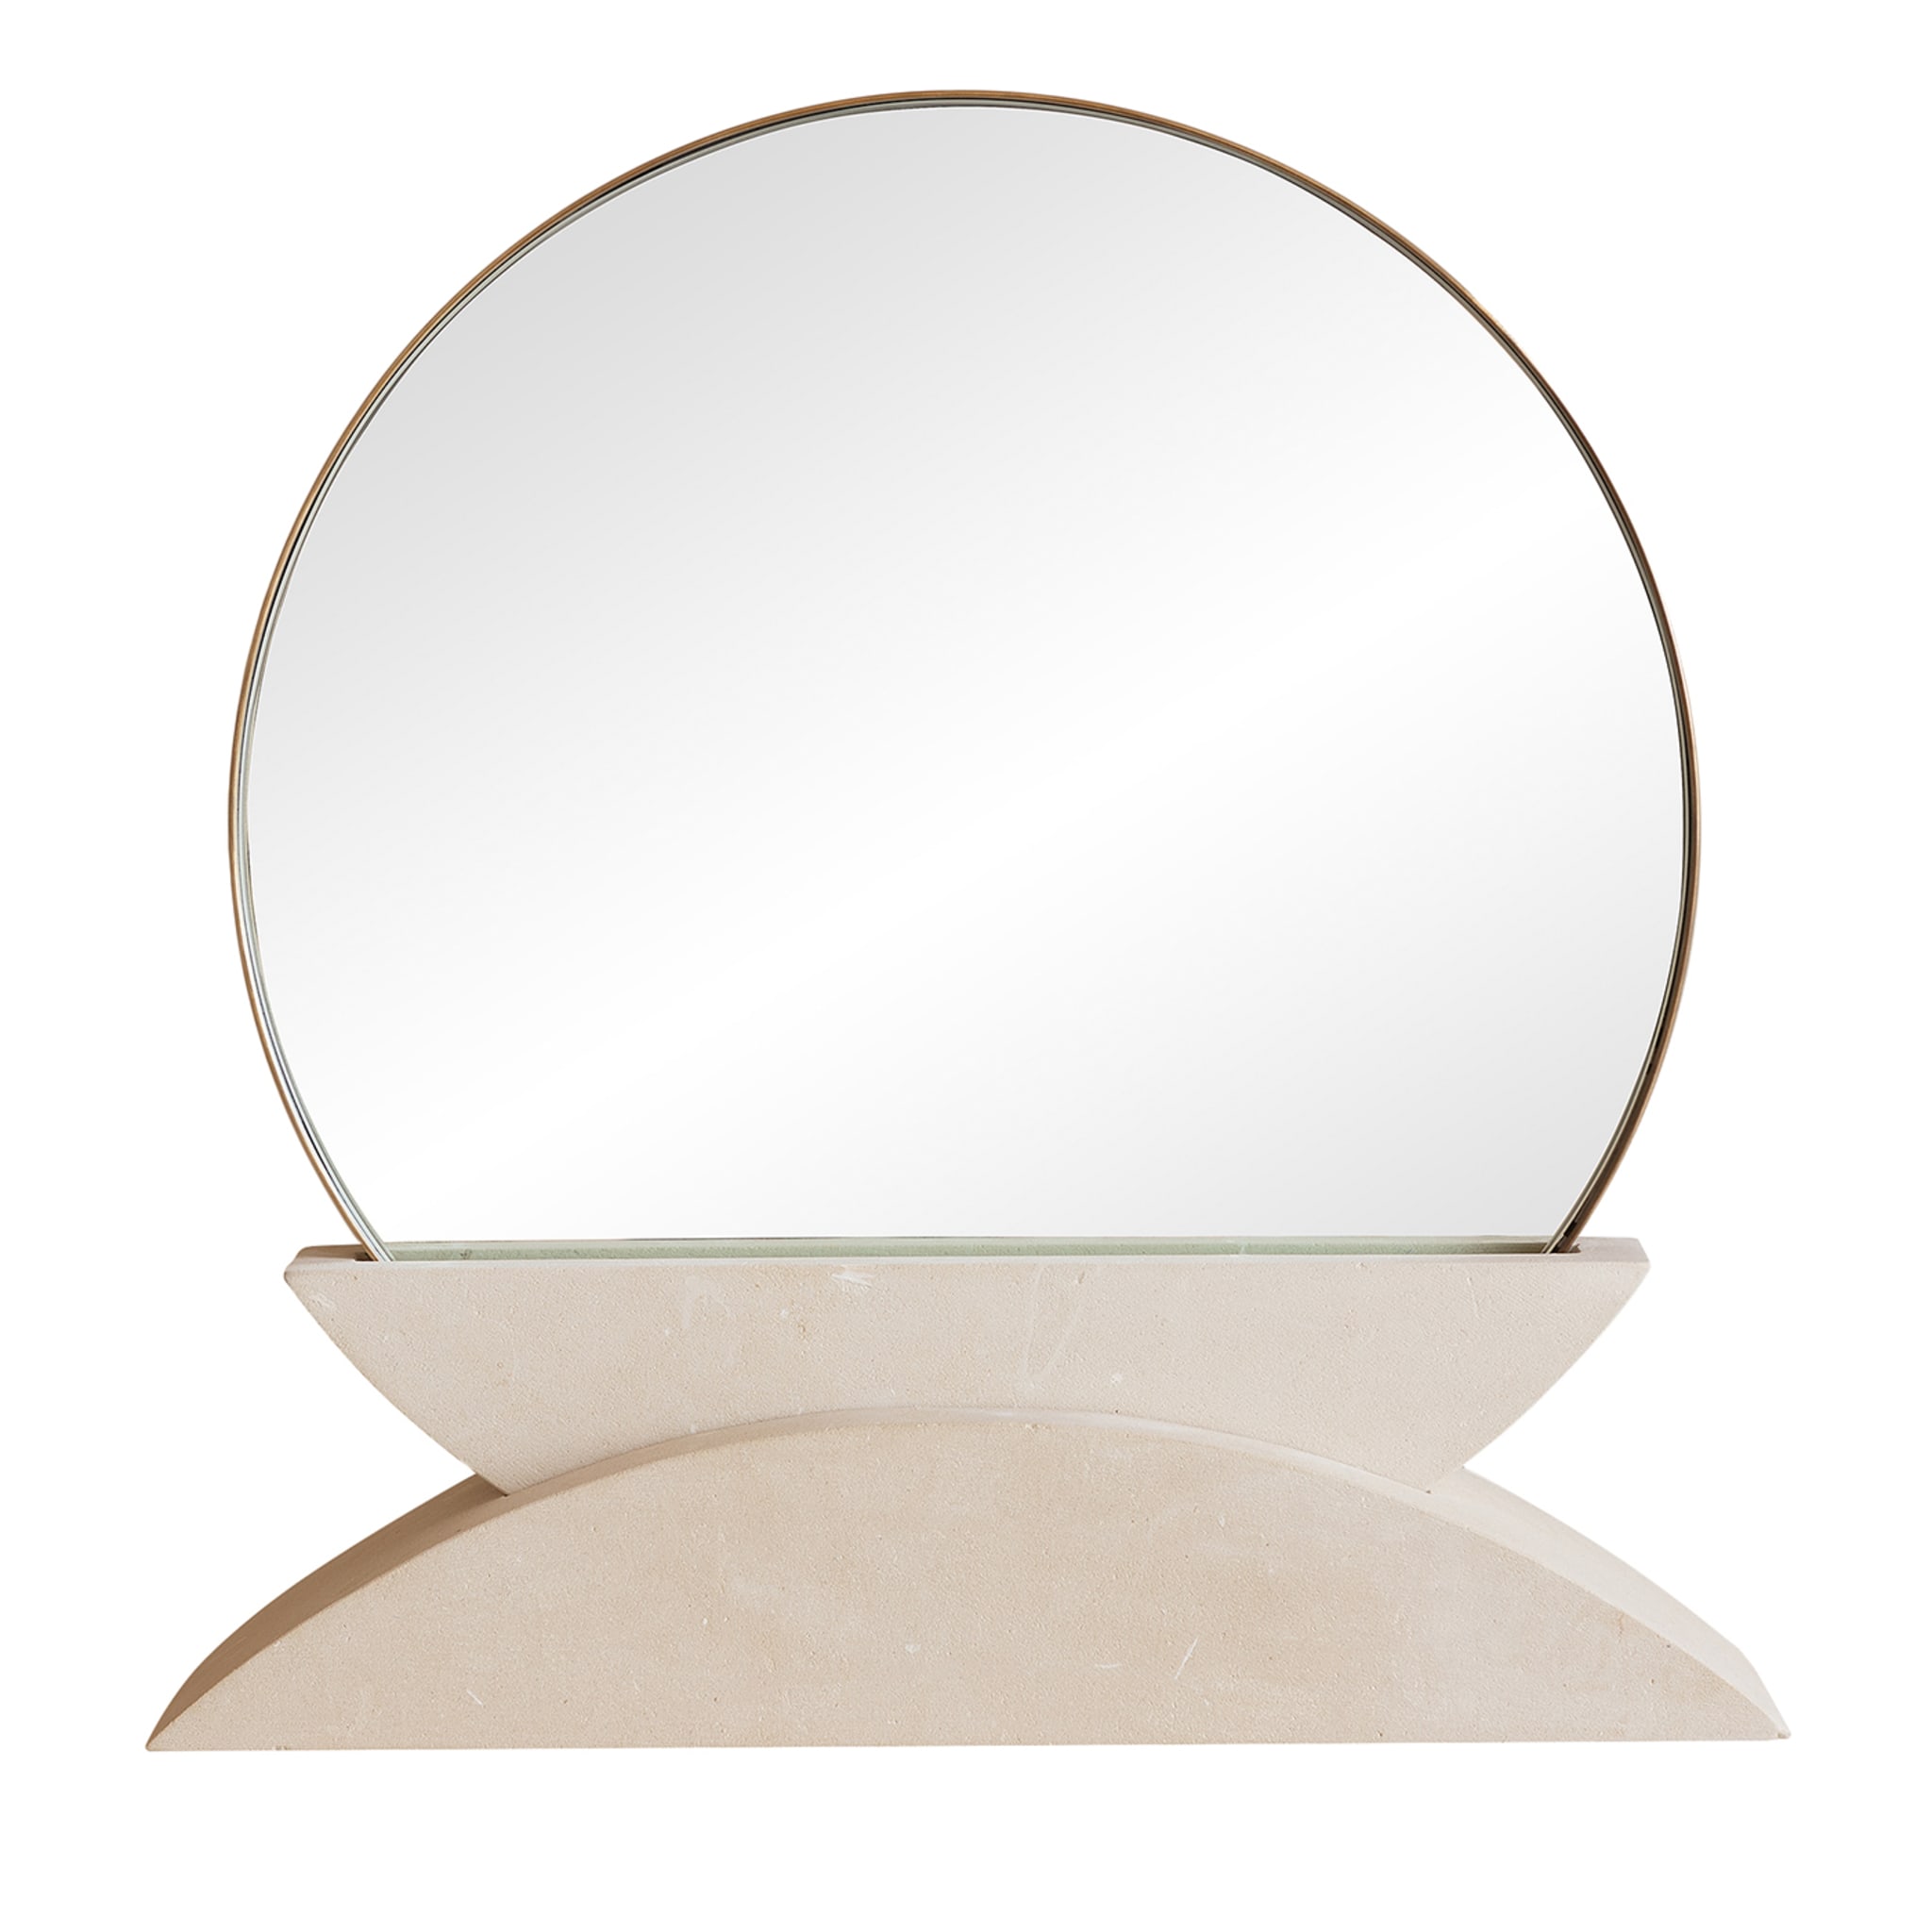 Orizzonte Tabletop Mirror by Apospersano - Main view